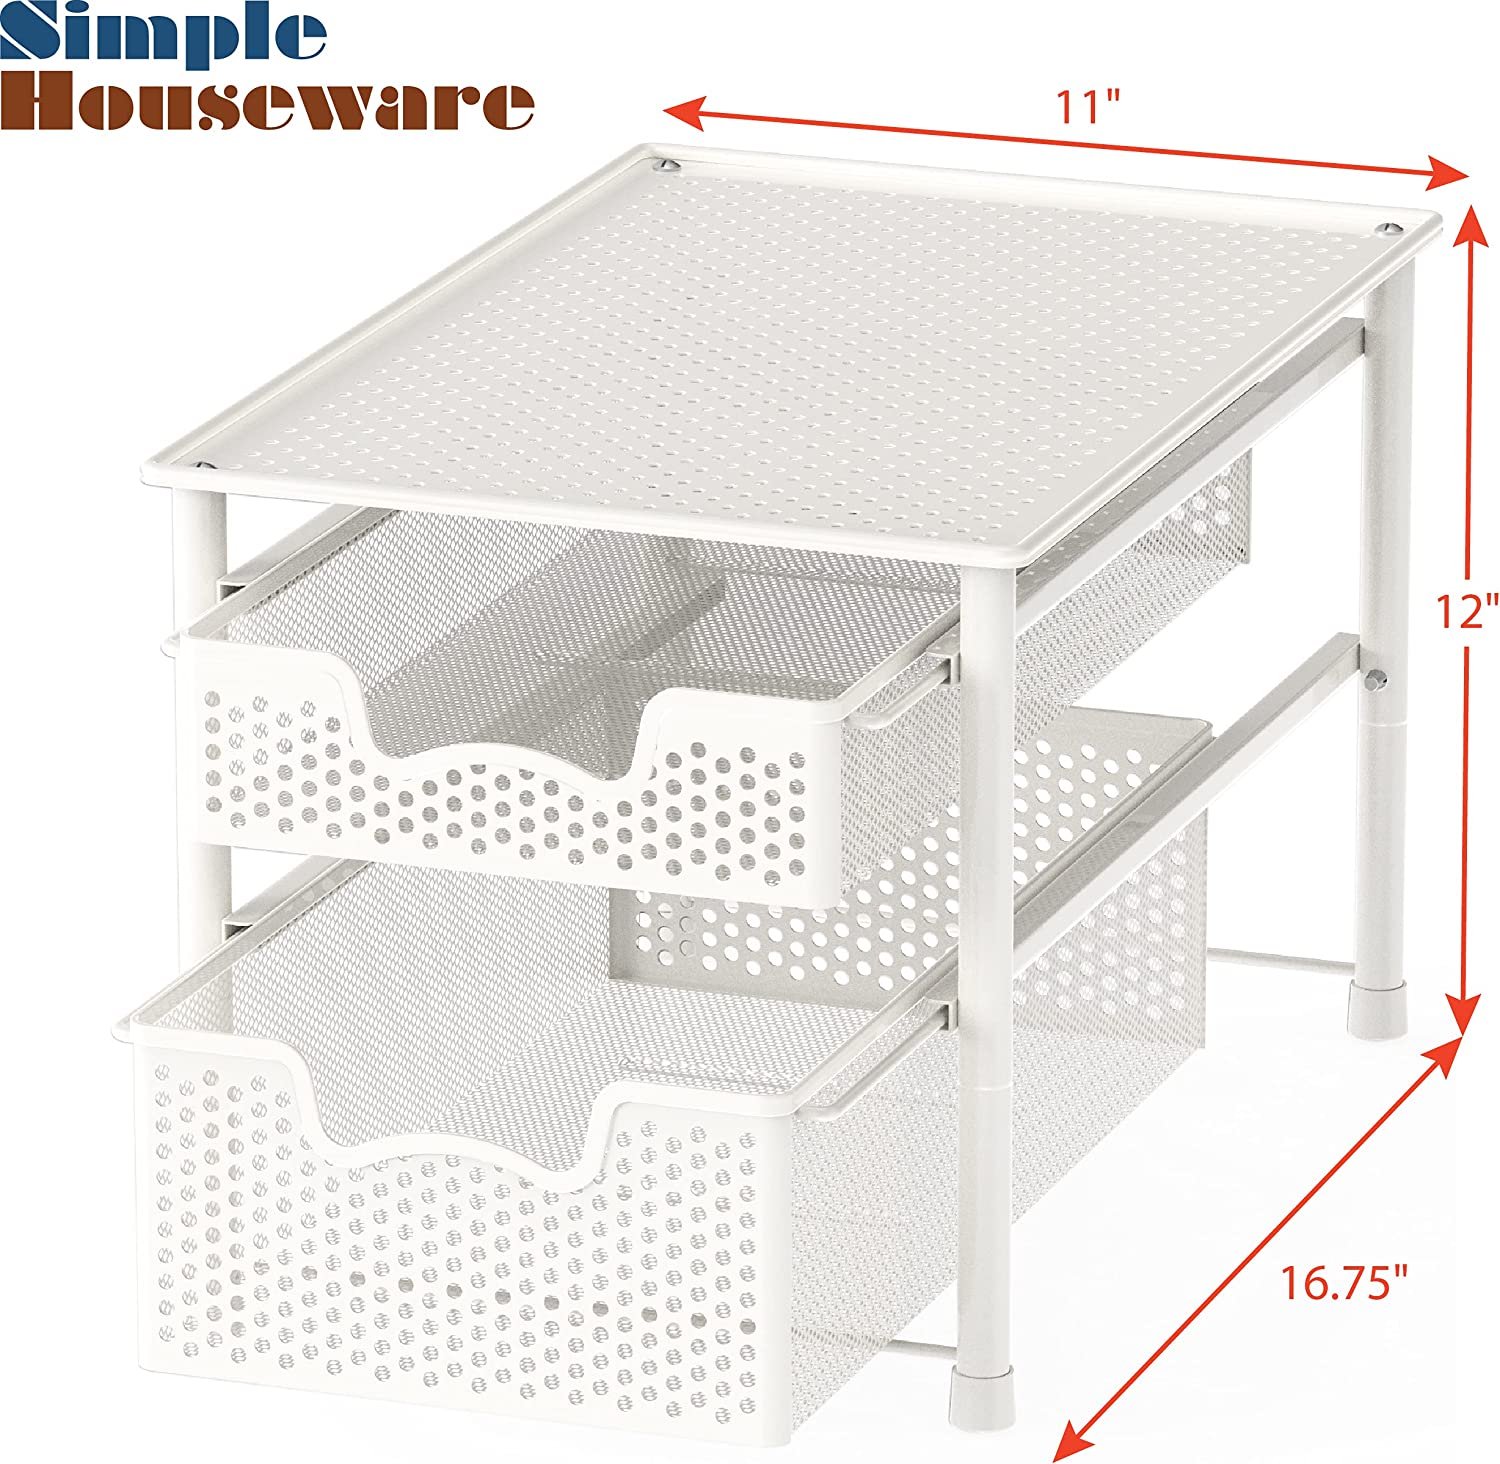 SimpleHouseware Stackable 3 Tier Sliding Basket Organizer Drawer, Black